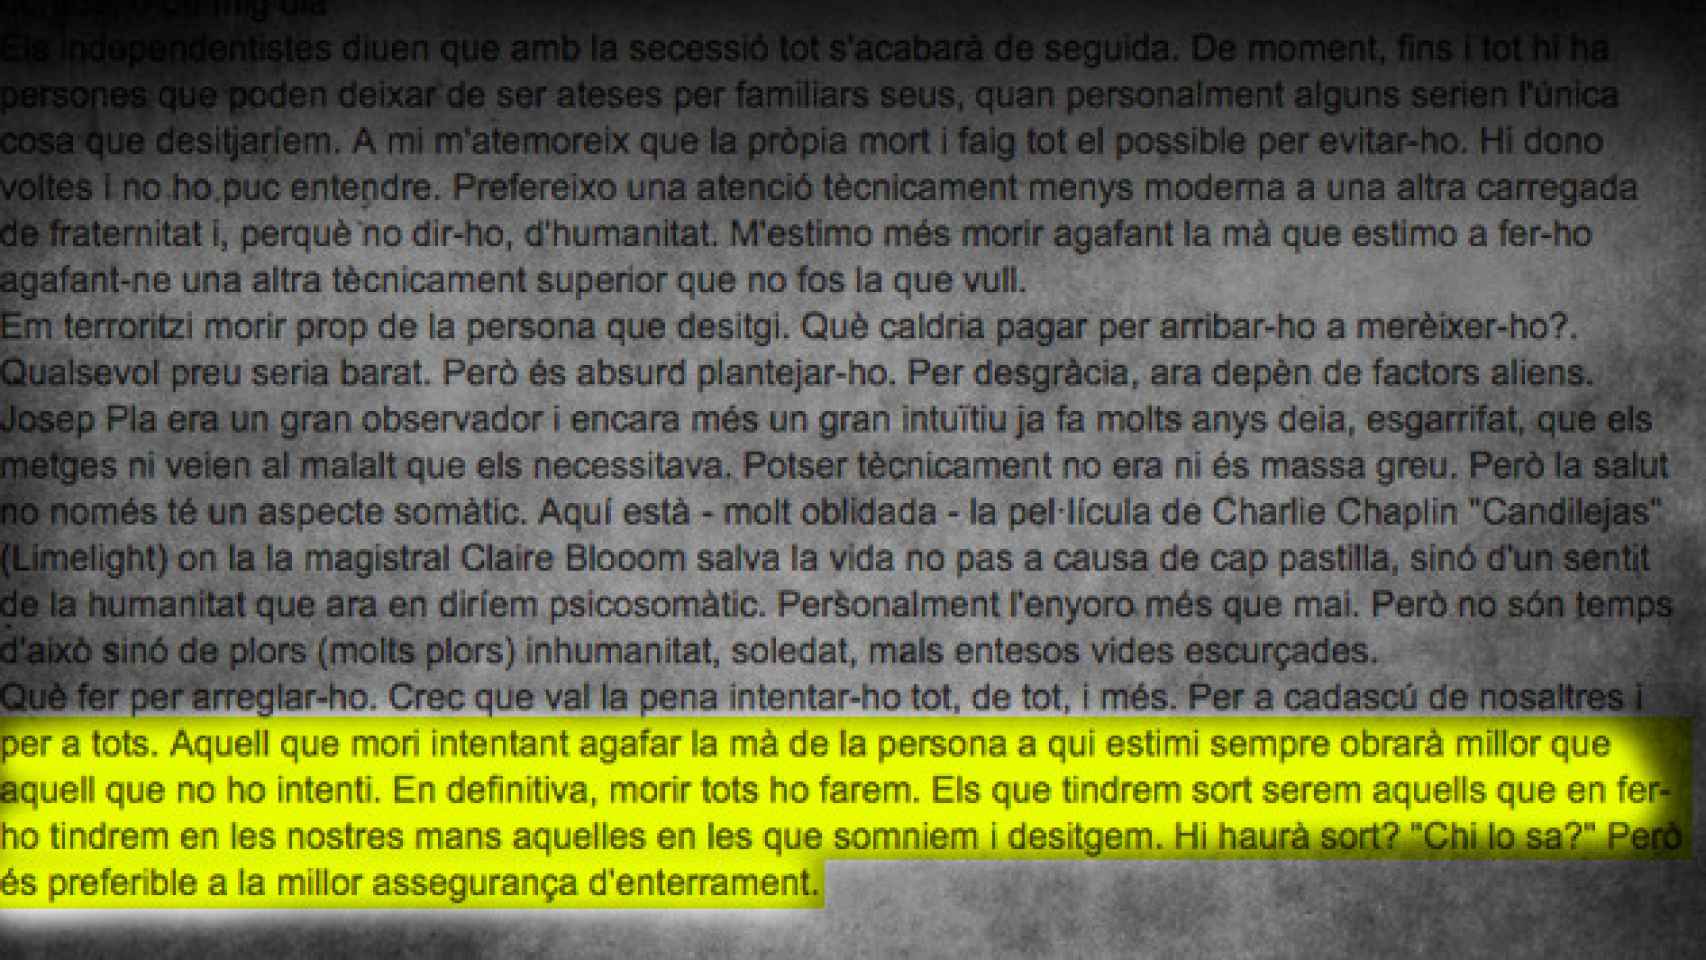 Fragmento del artículo que Alfons Quintà escribió en el Diari de Girona / CG